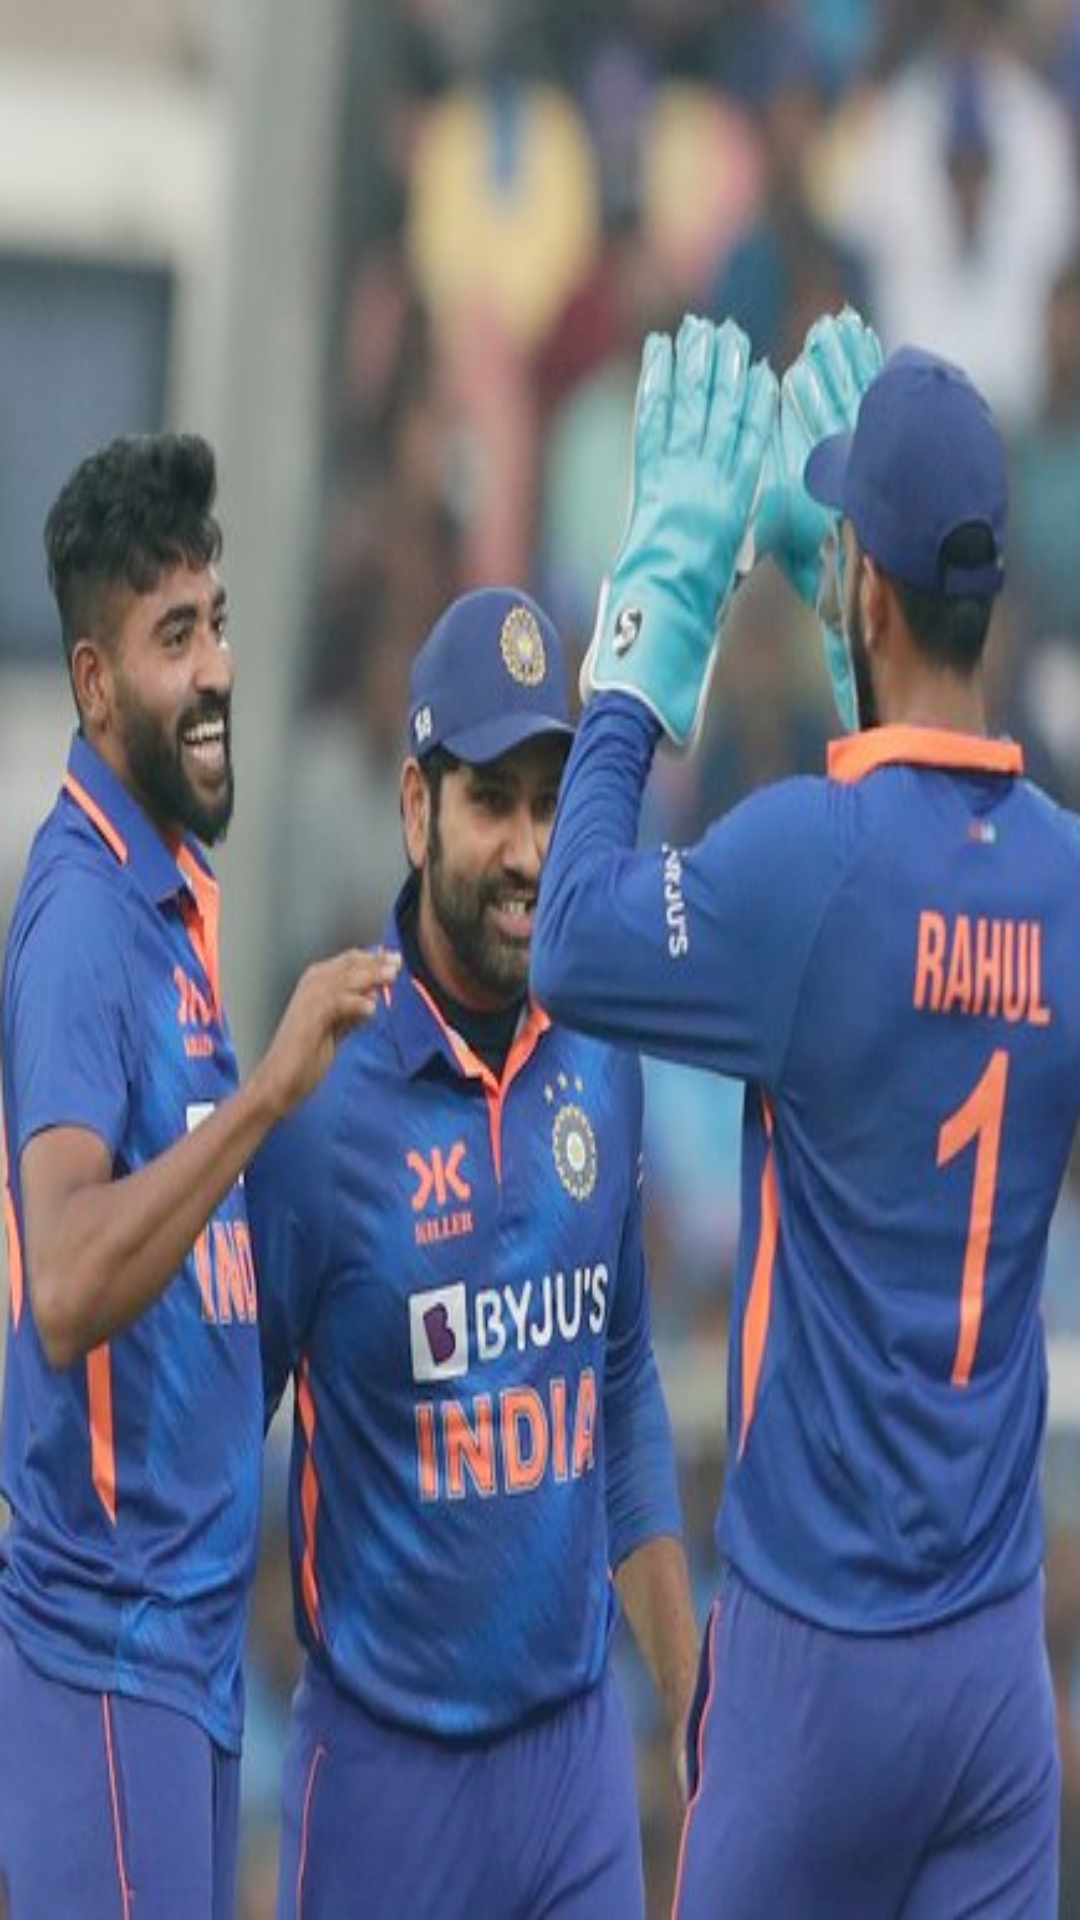 IND vs SL 3rd ODI: List of Team India's top 5 wins (by runs)